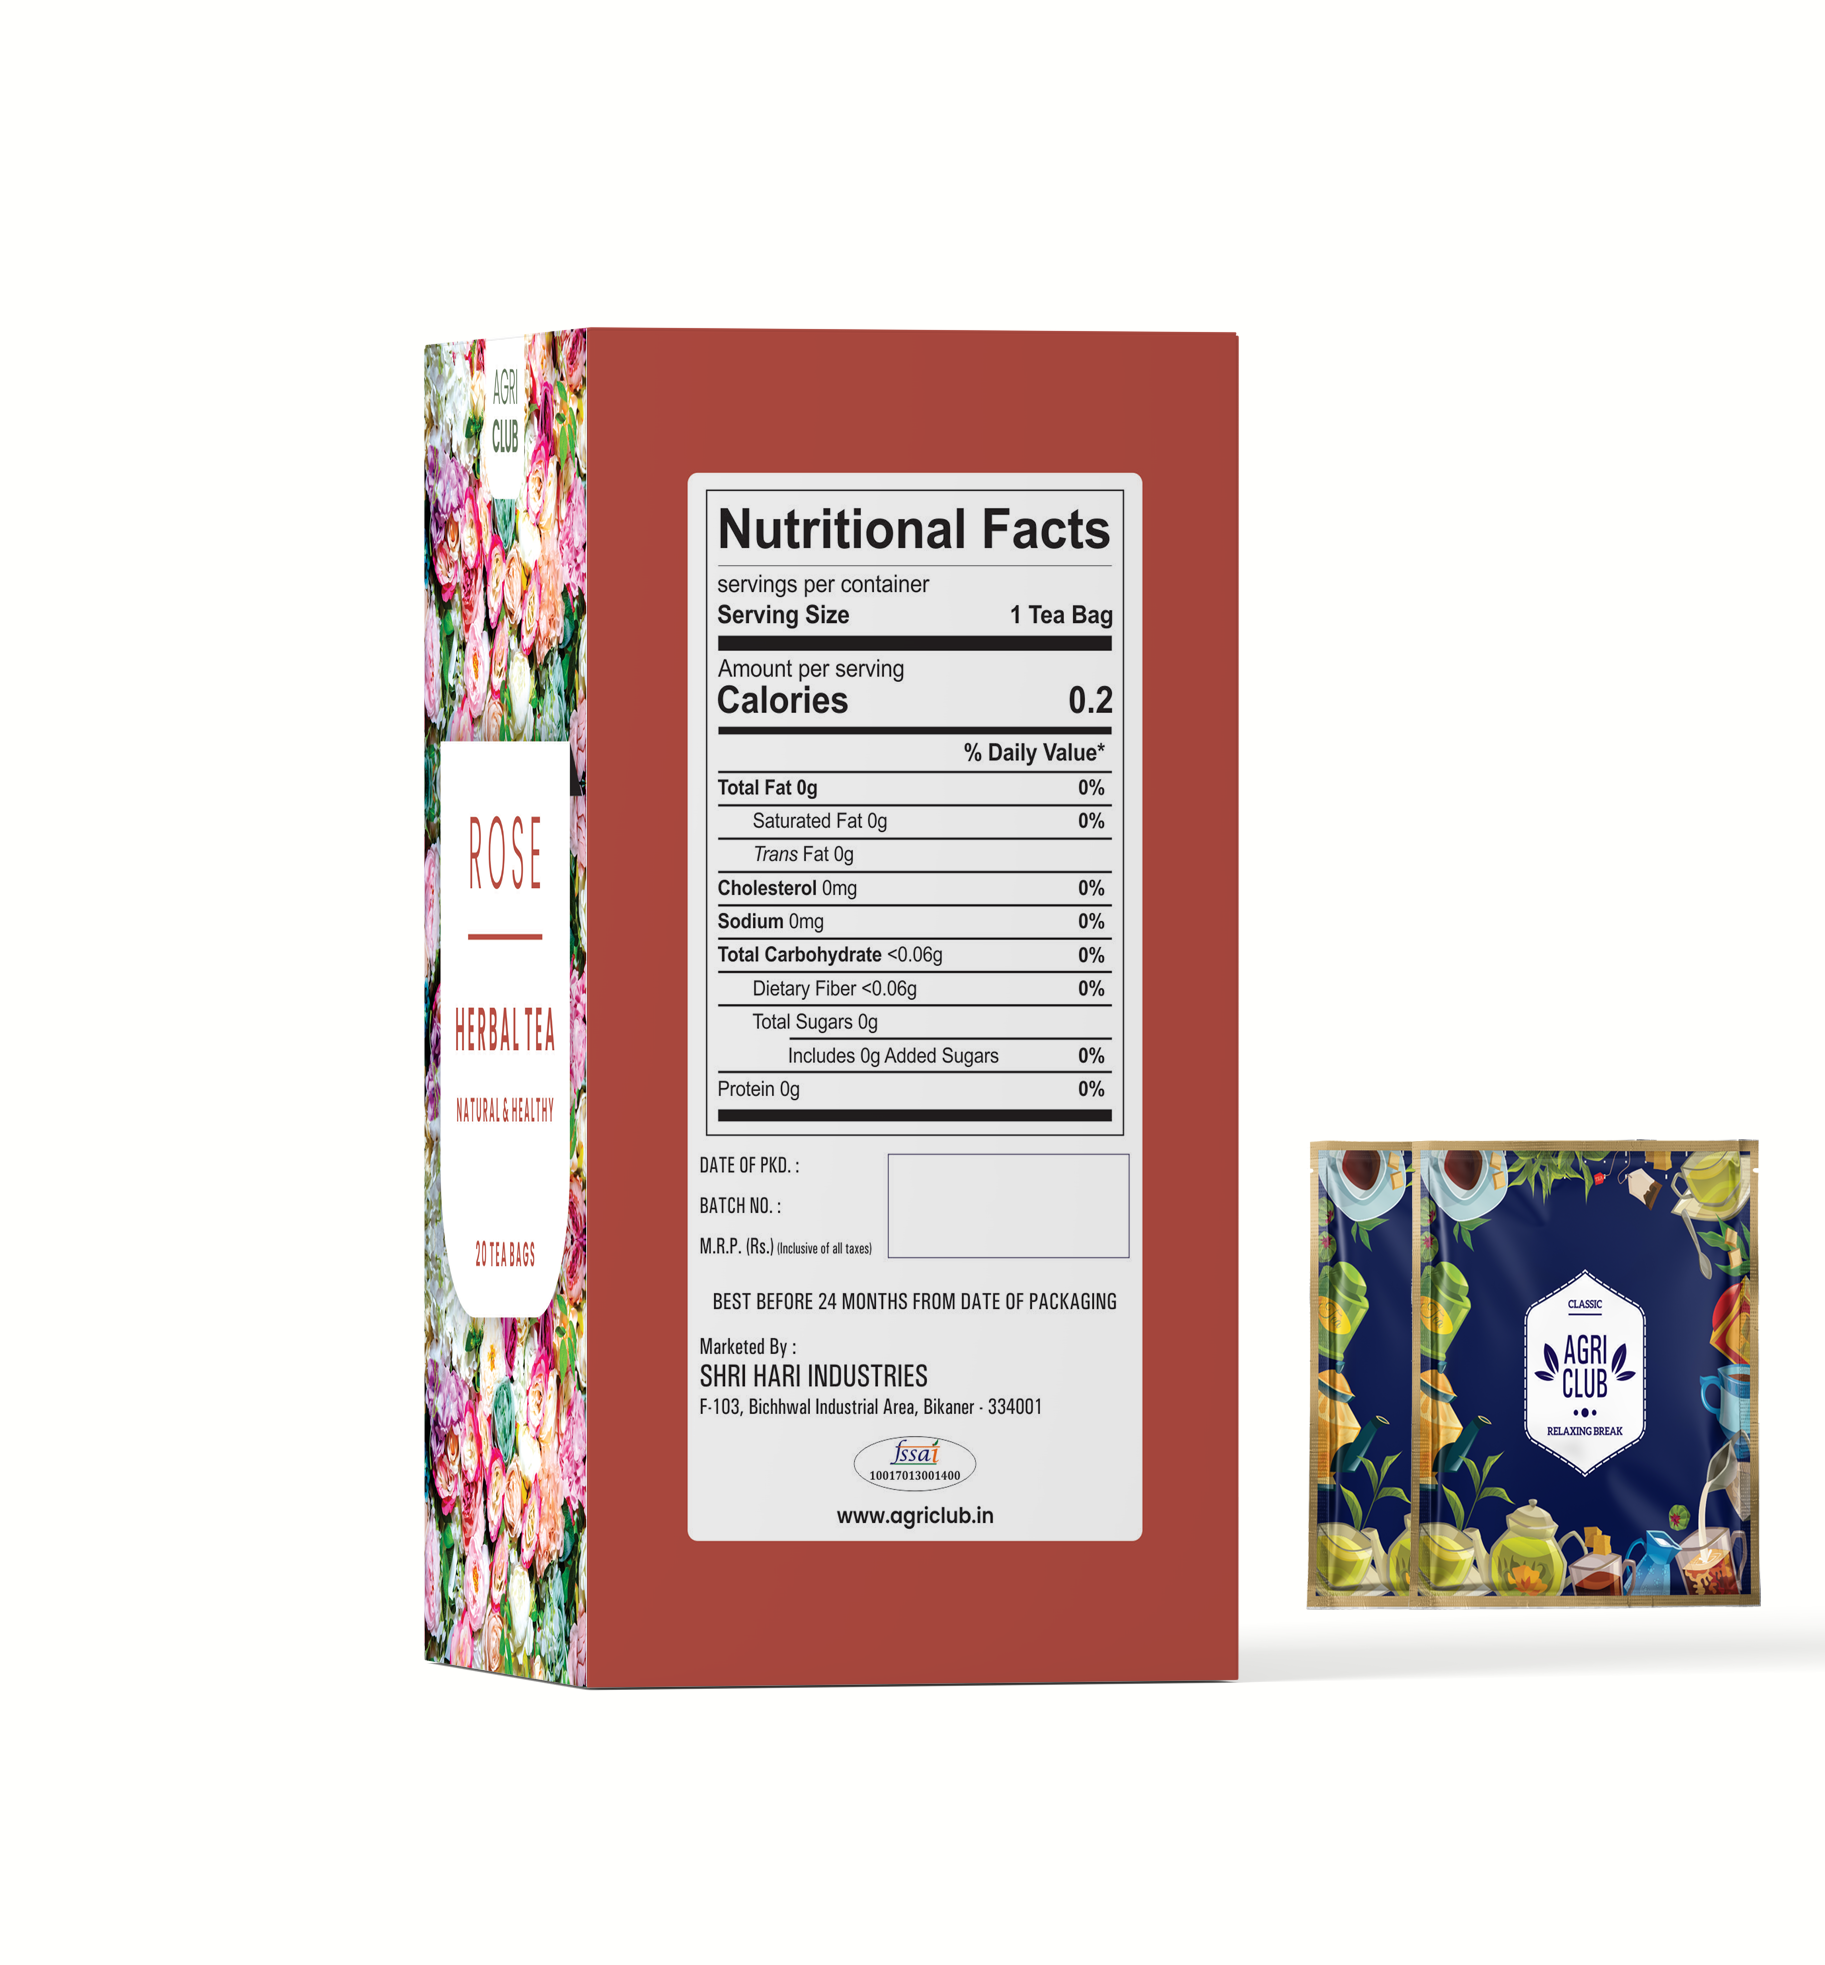 Rose Herbal Infusion Tea Premium Quality 20 Sachets